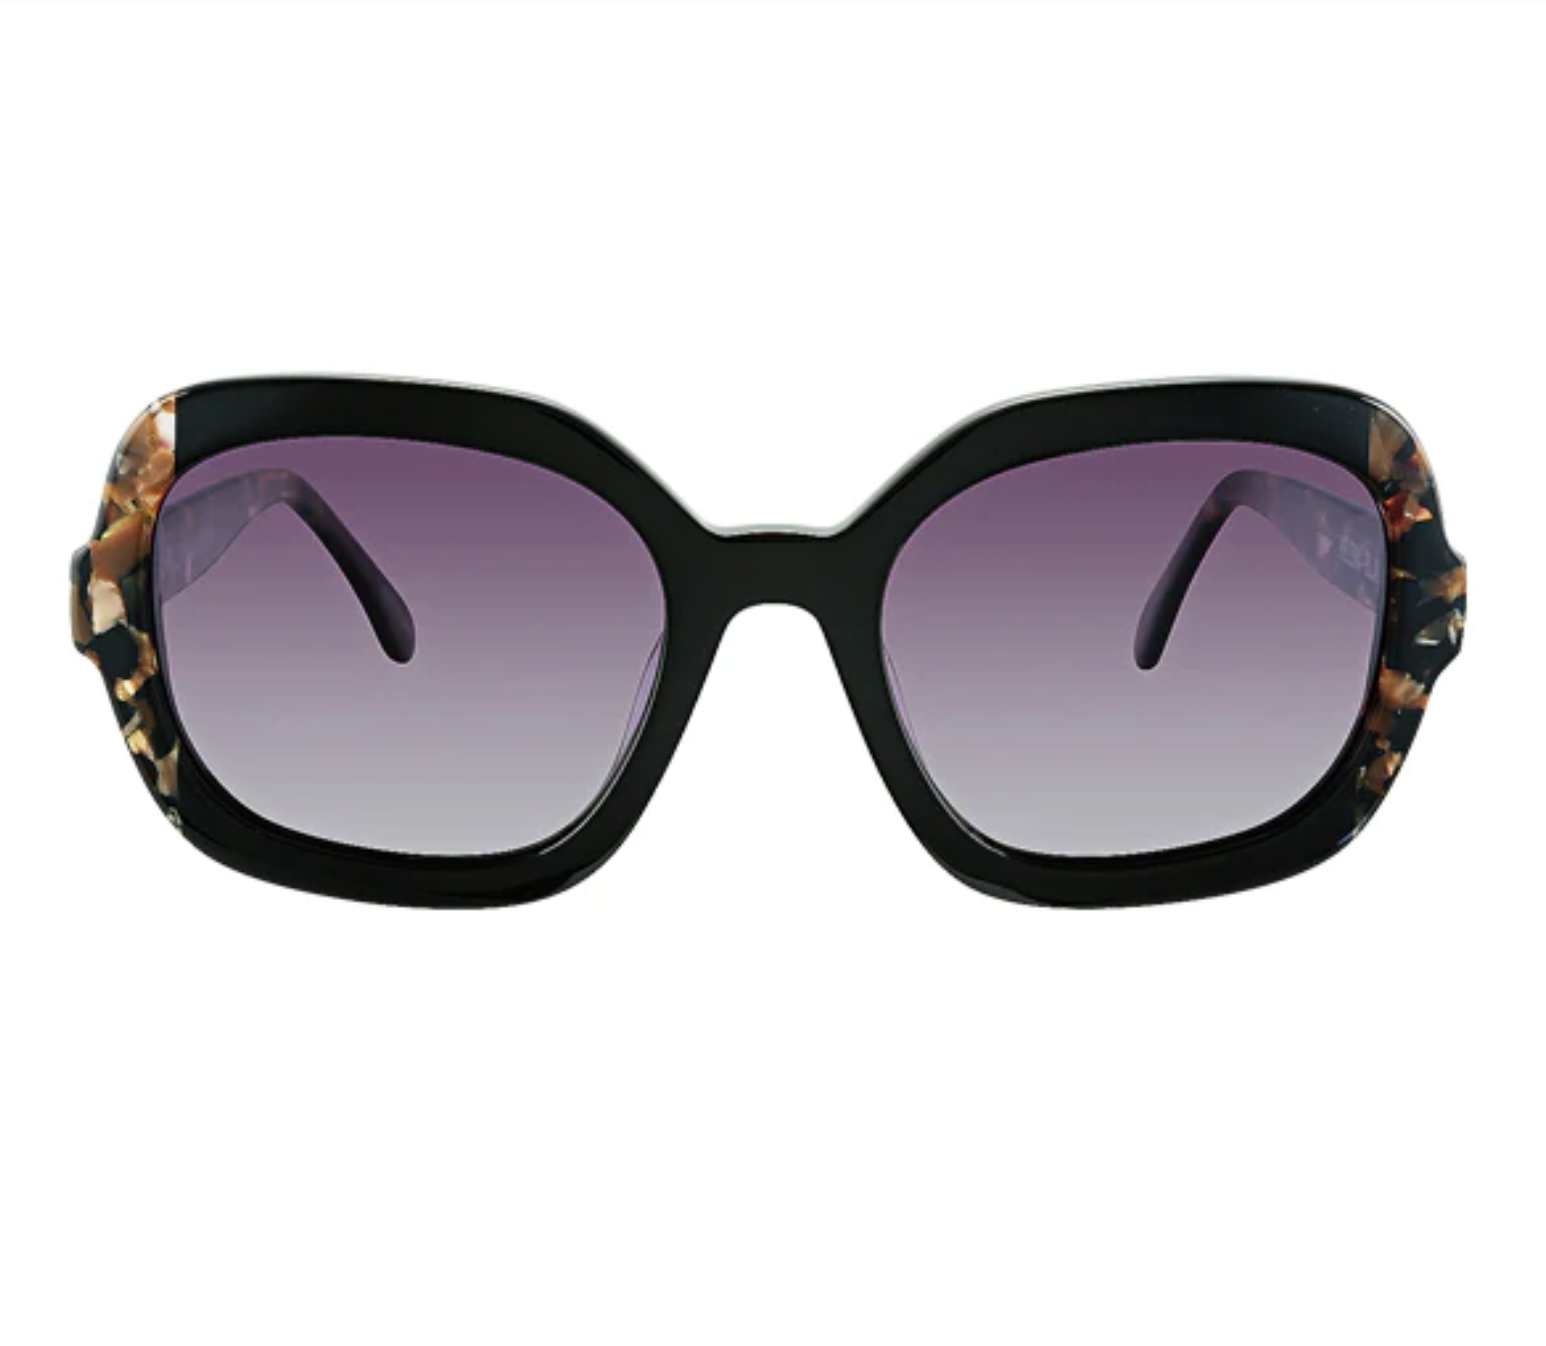 Helena Black Sunglasses